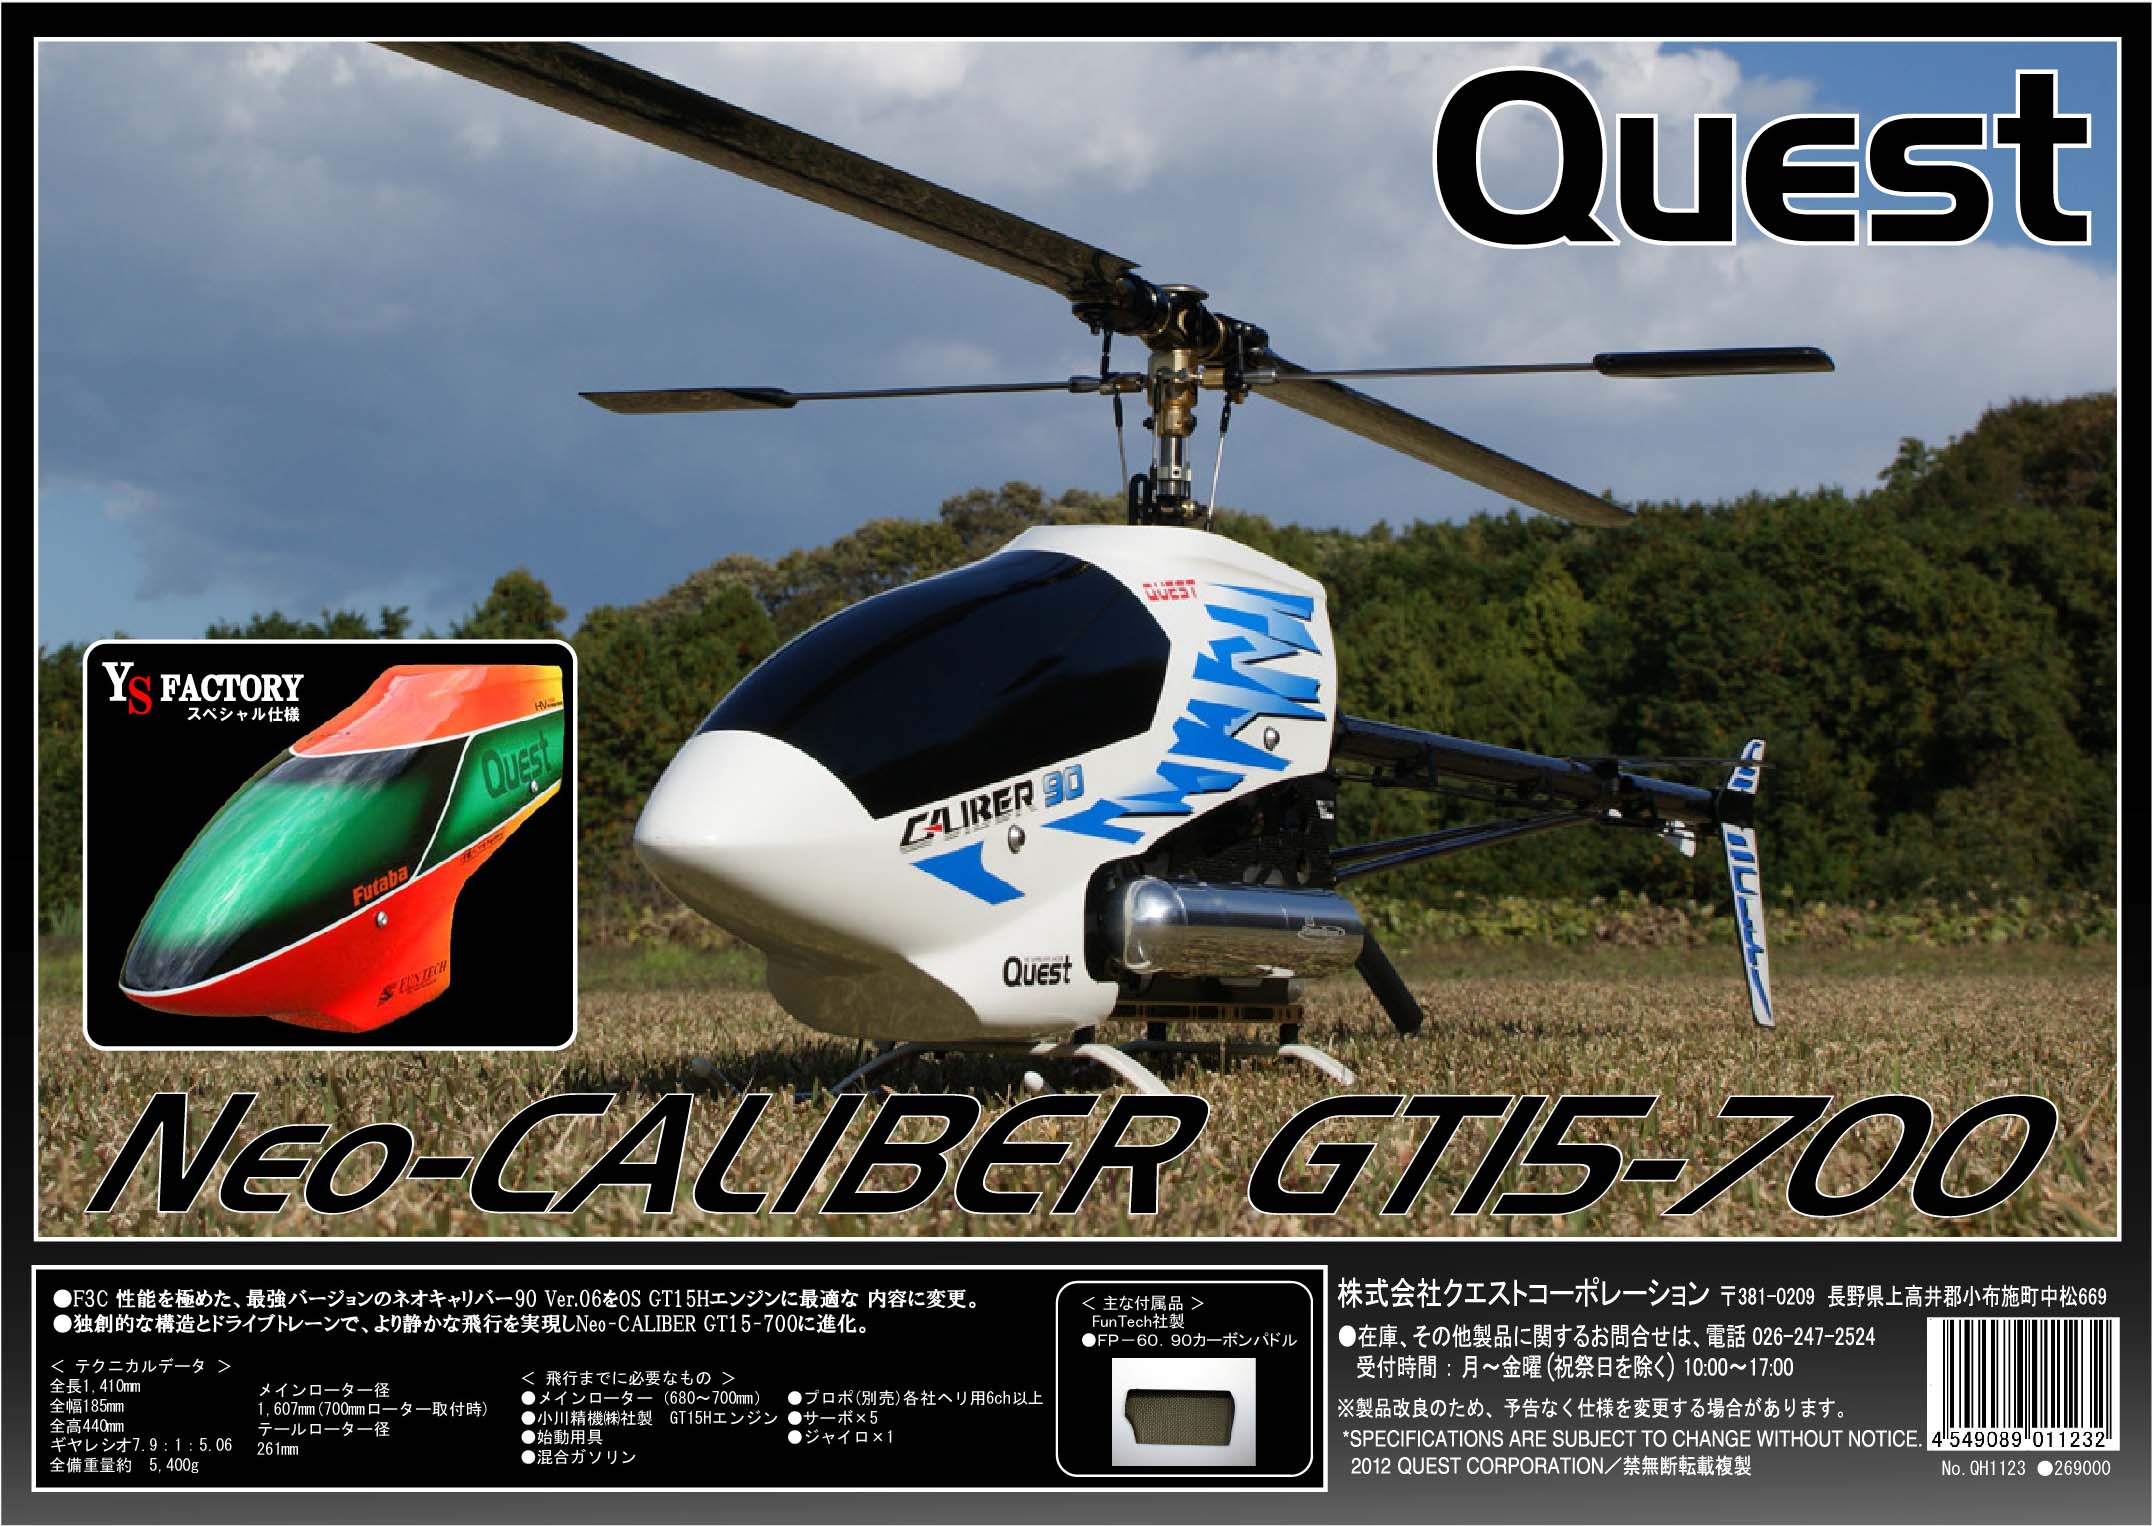 Neo-Caliber GT-15-700 Ysペイント仕様